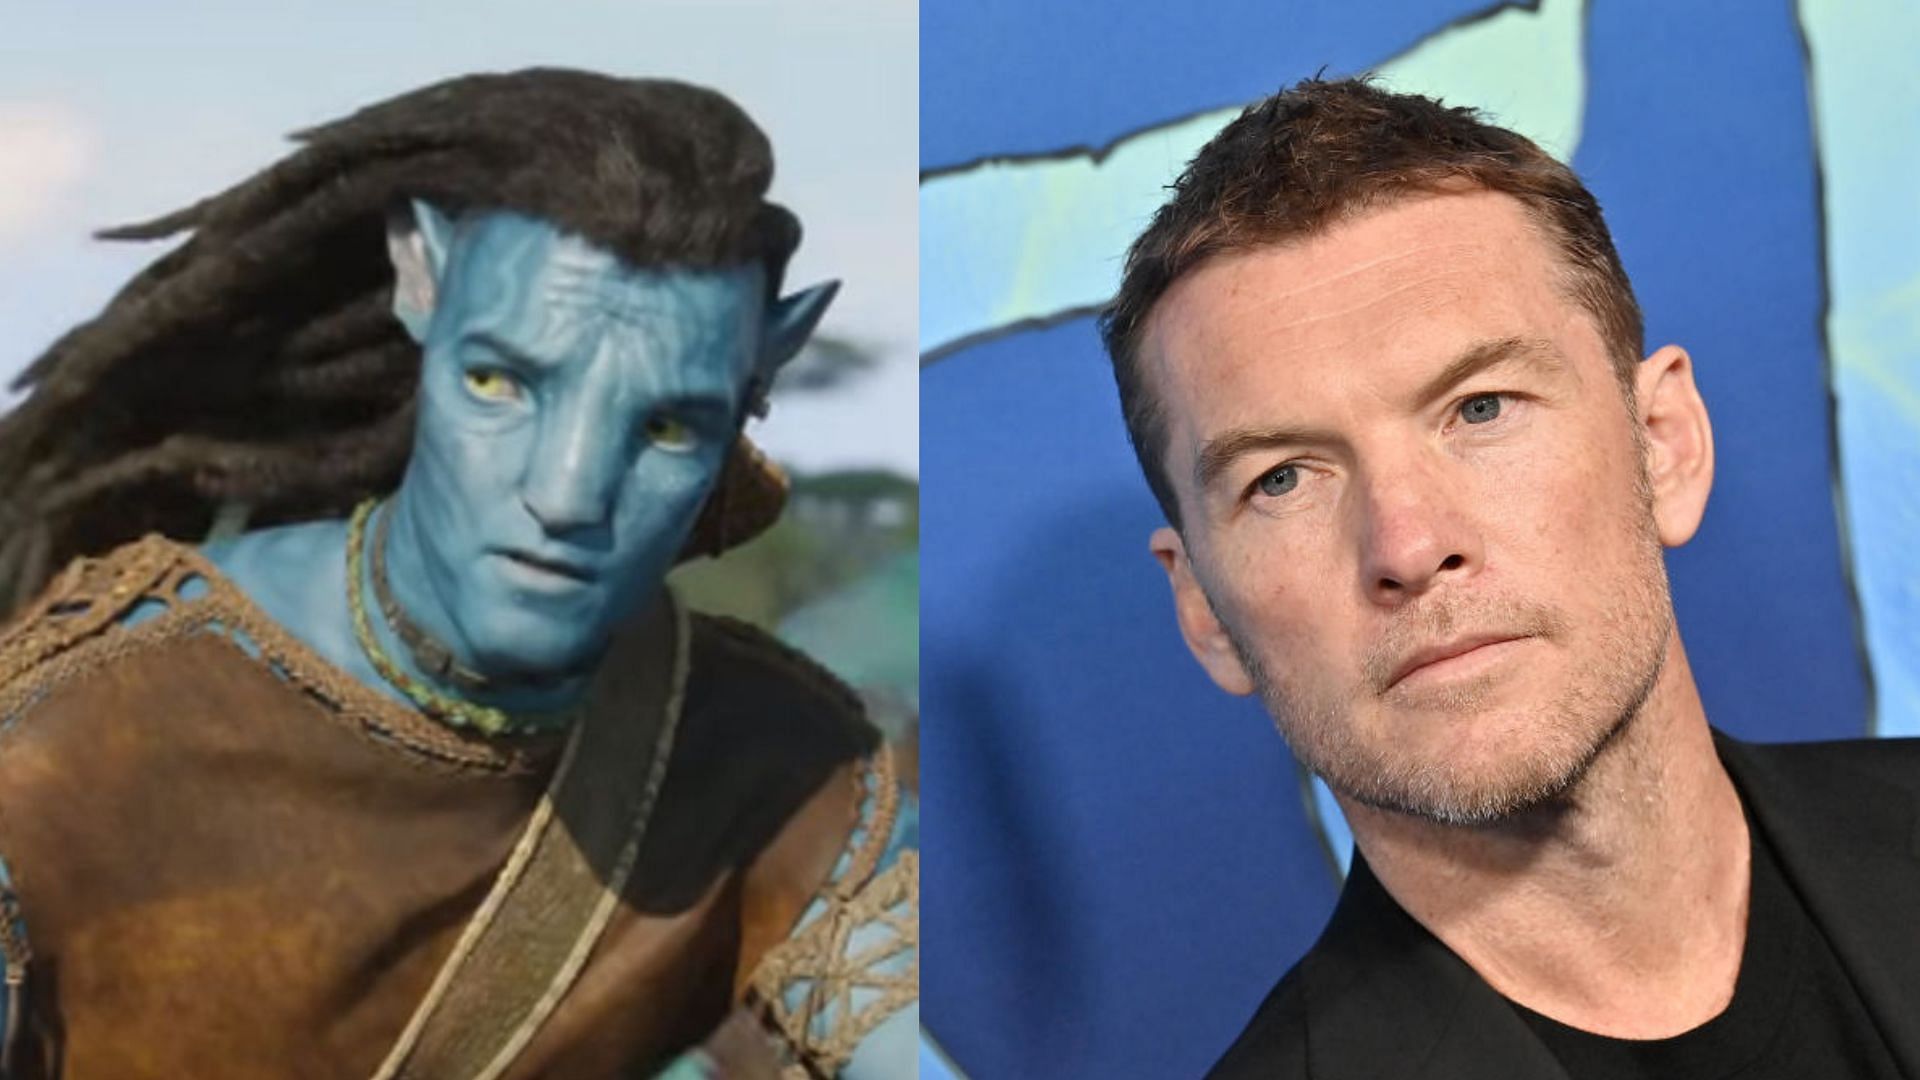 Avatar The Way of Water cast visit Pandora talk new film